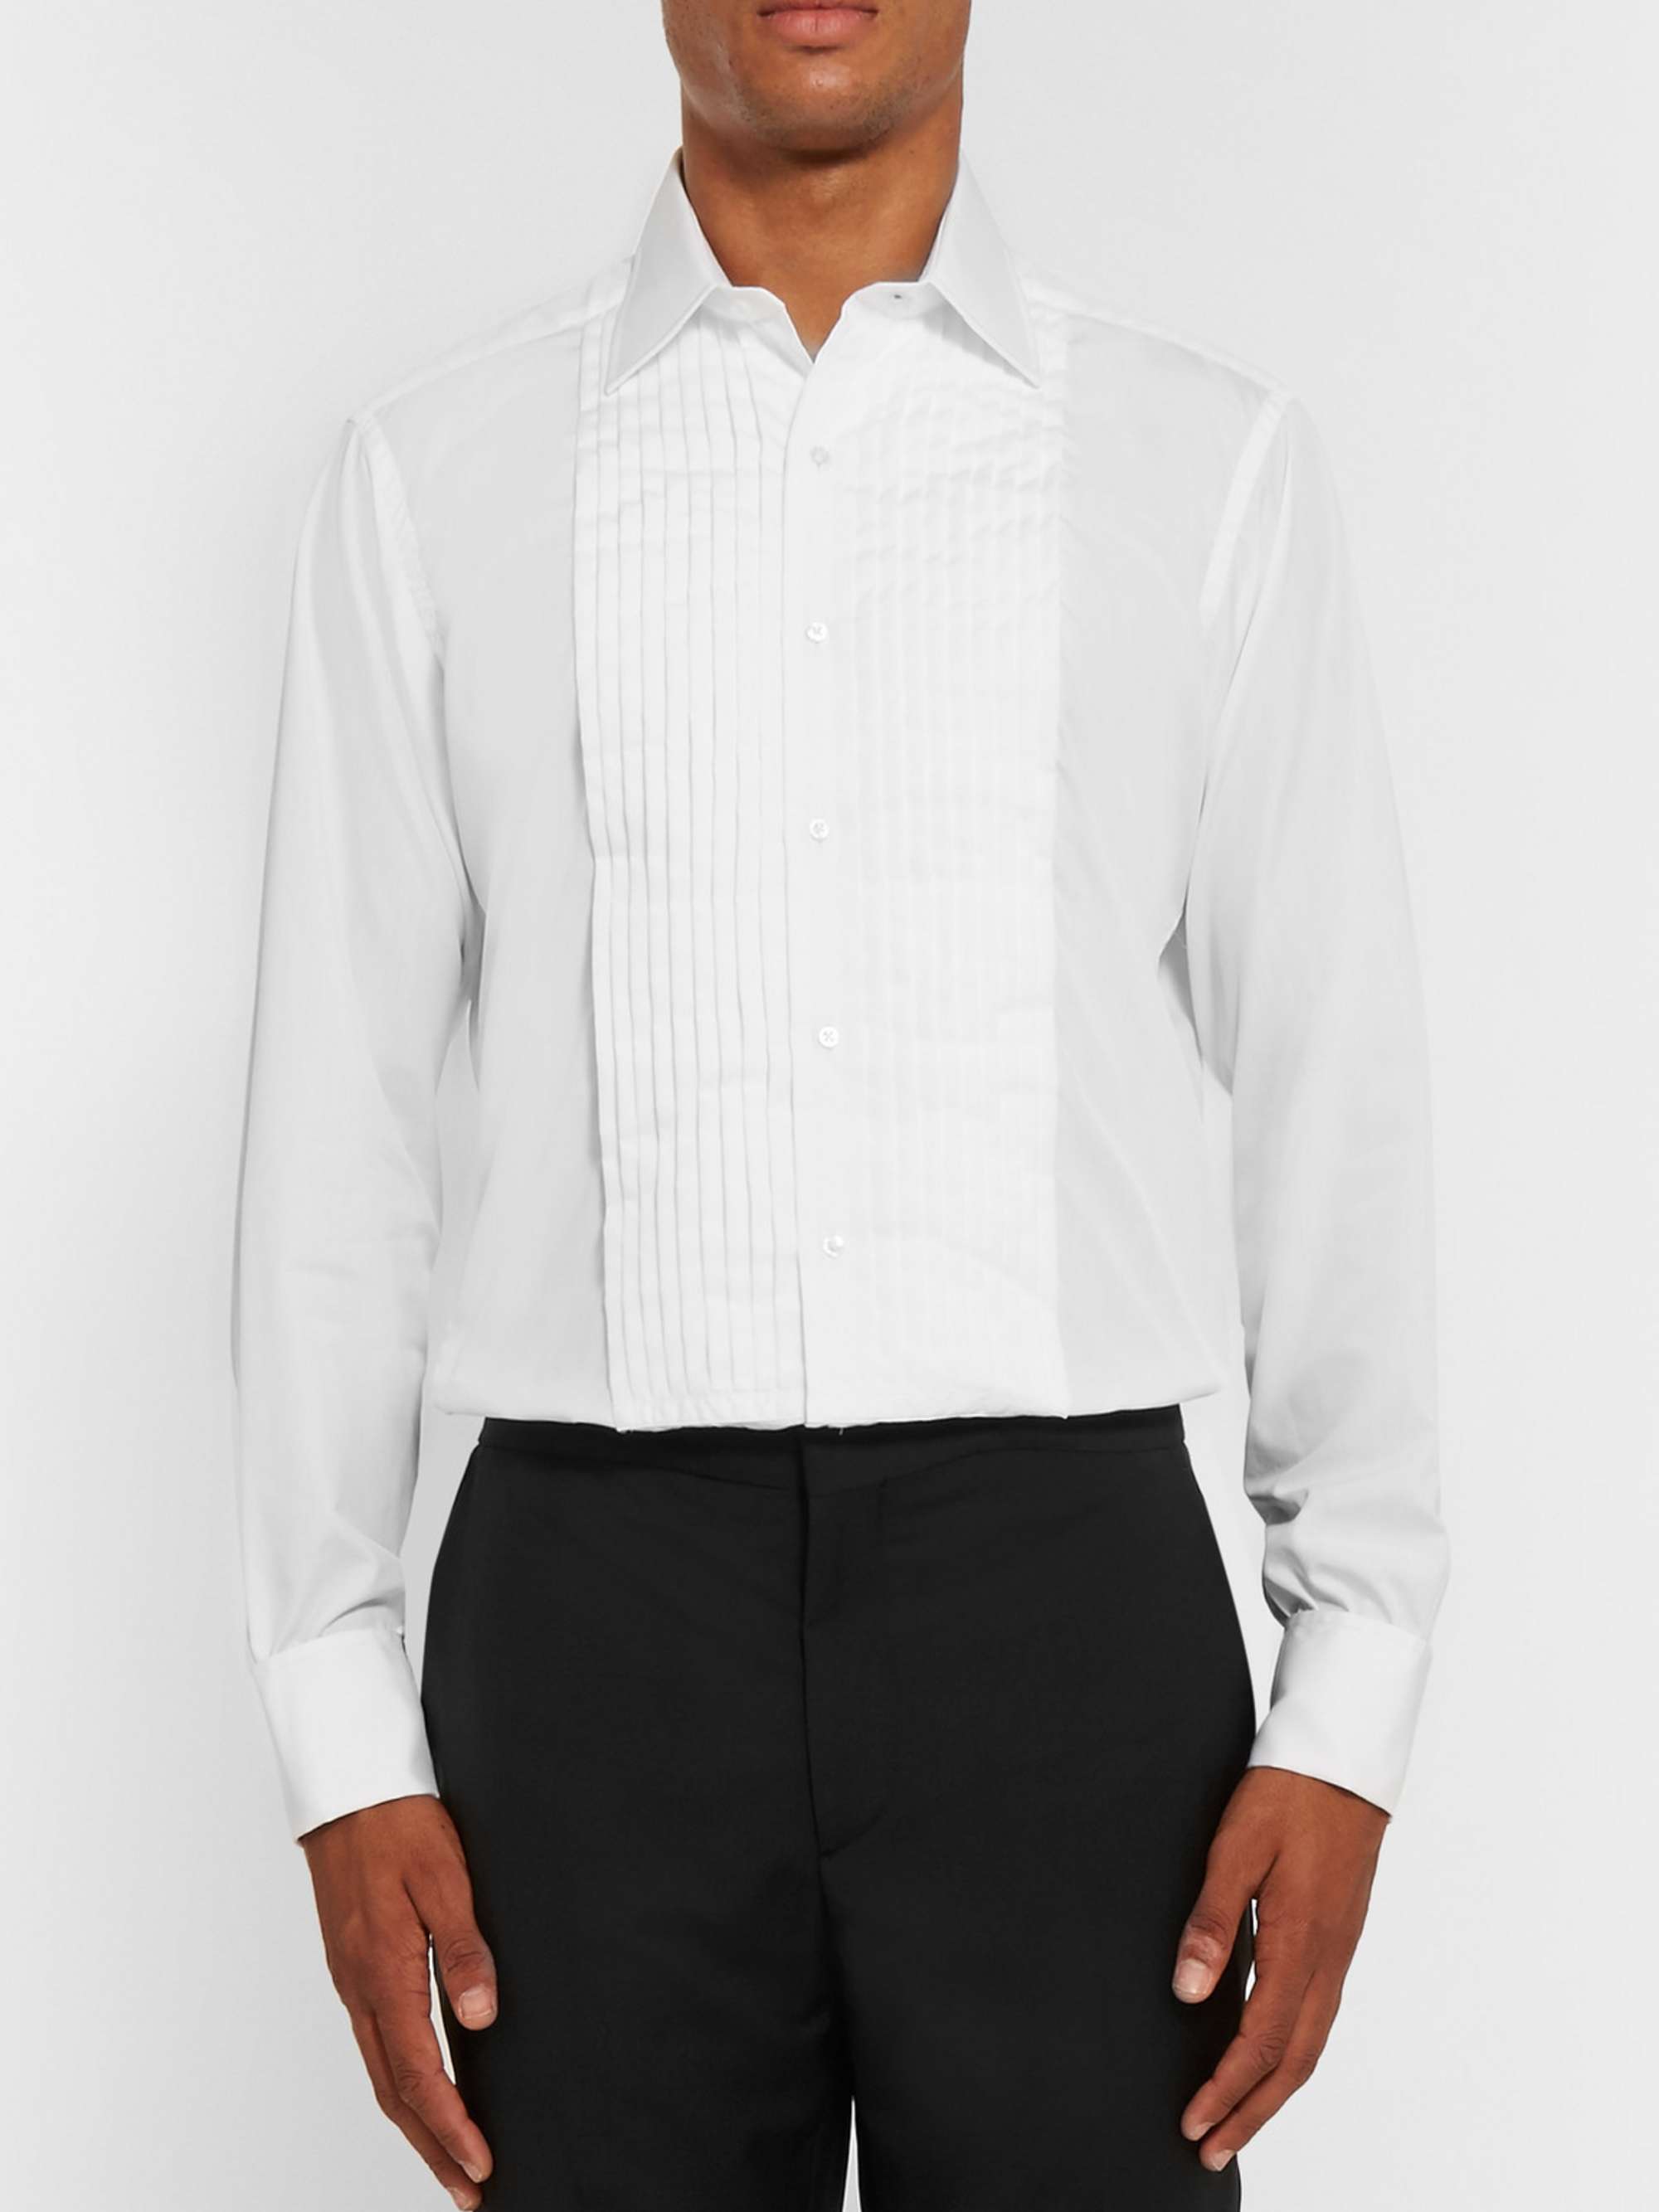 TURNBULL & ASSER White Sea Island Cotton Tuxedo Shirt